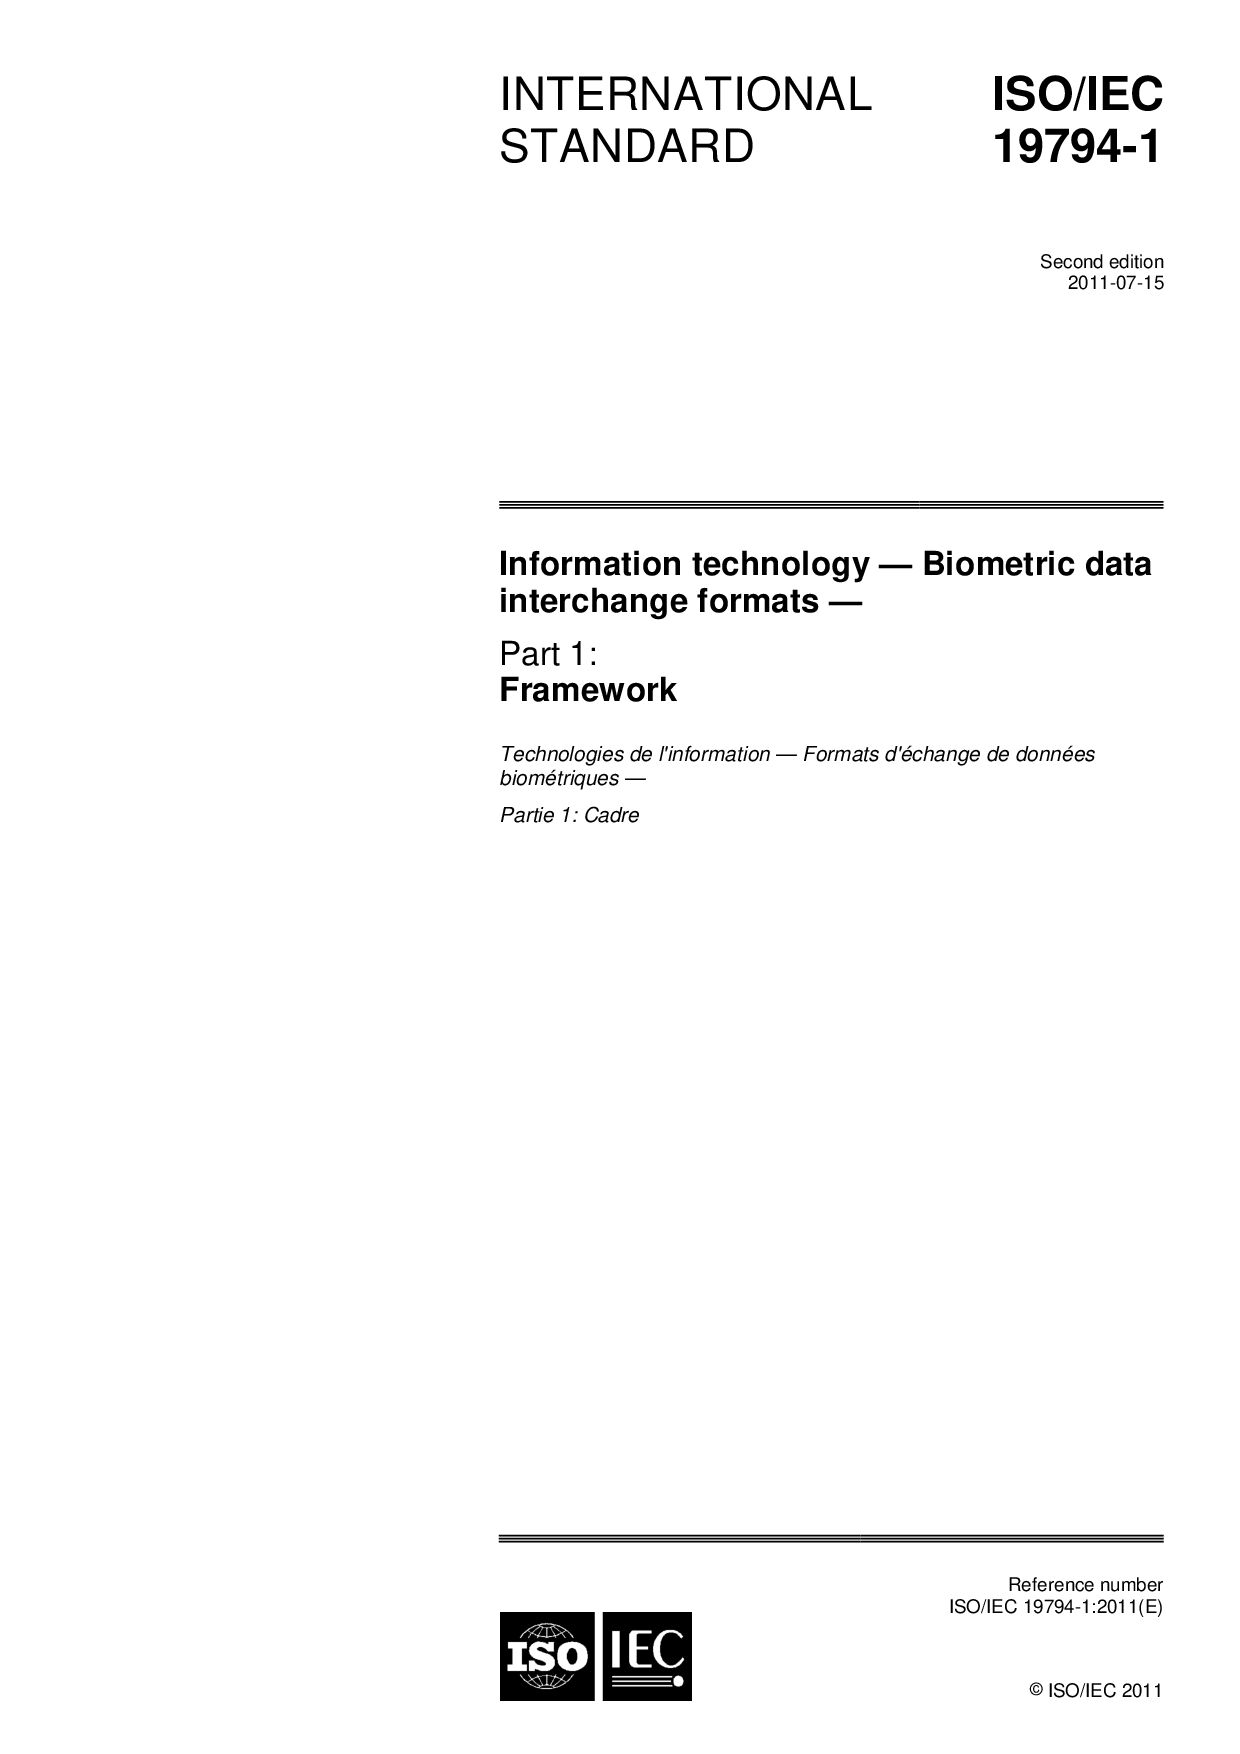 ISO/IEC 19794-1:2011